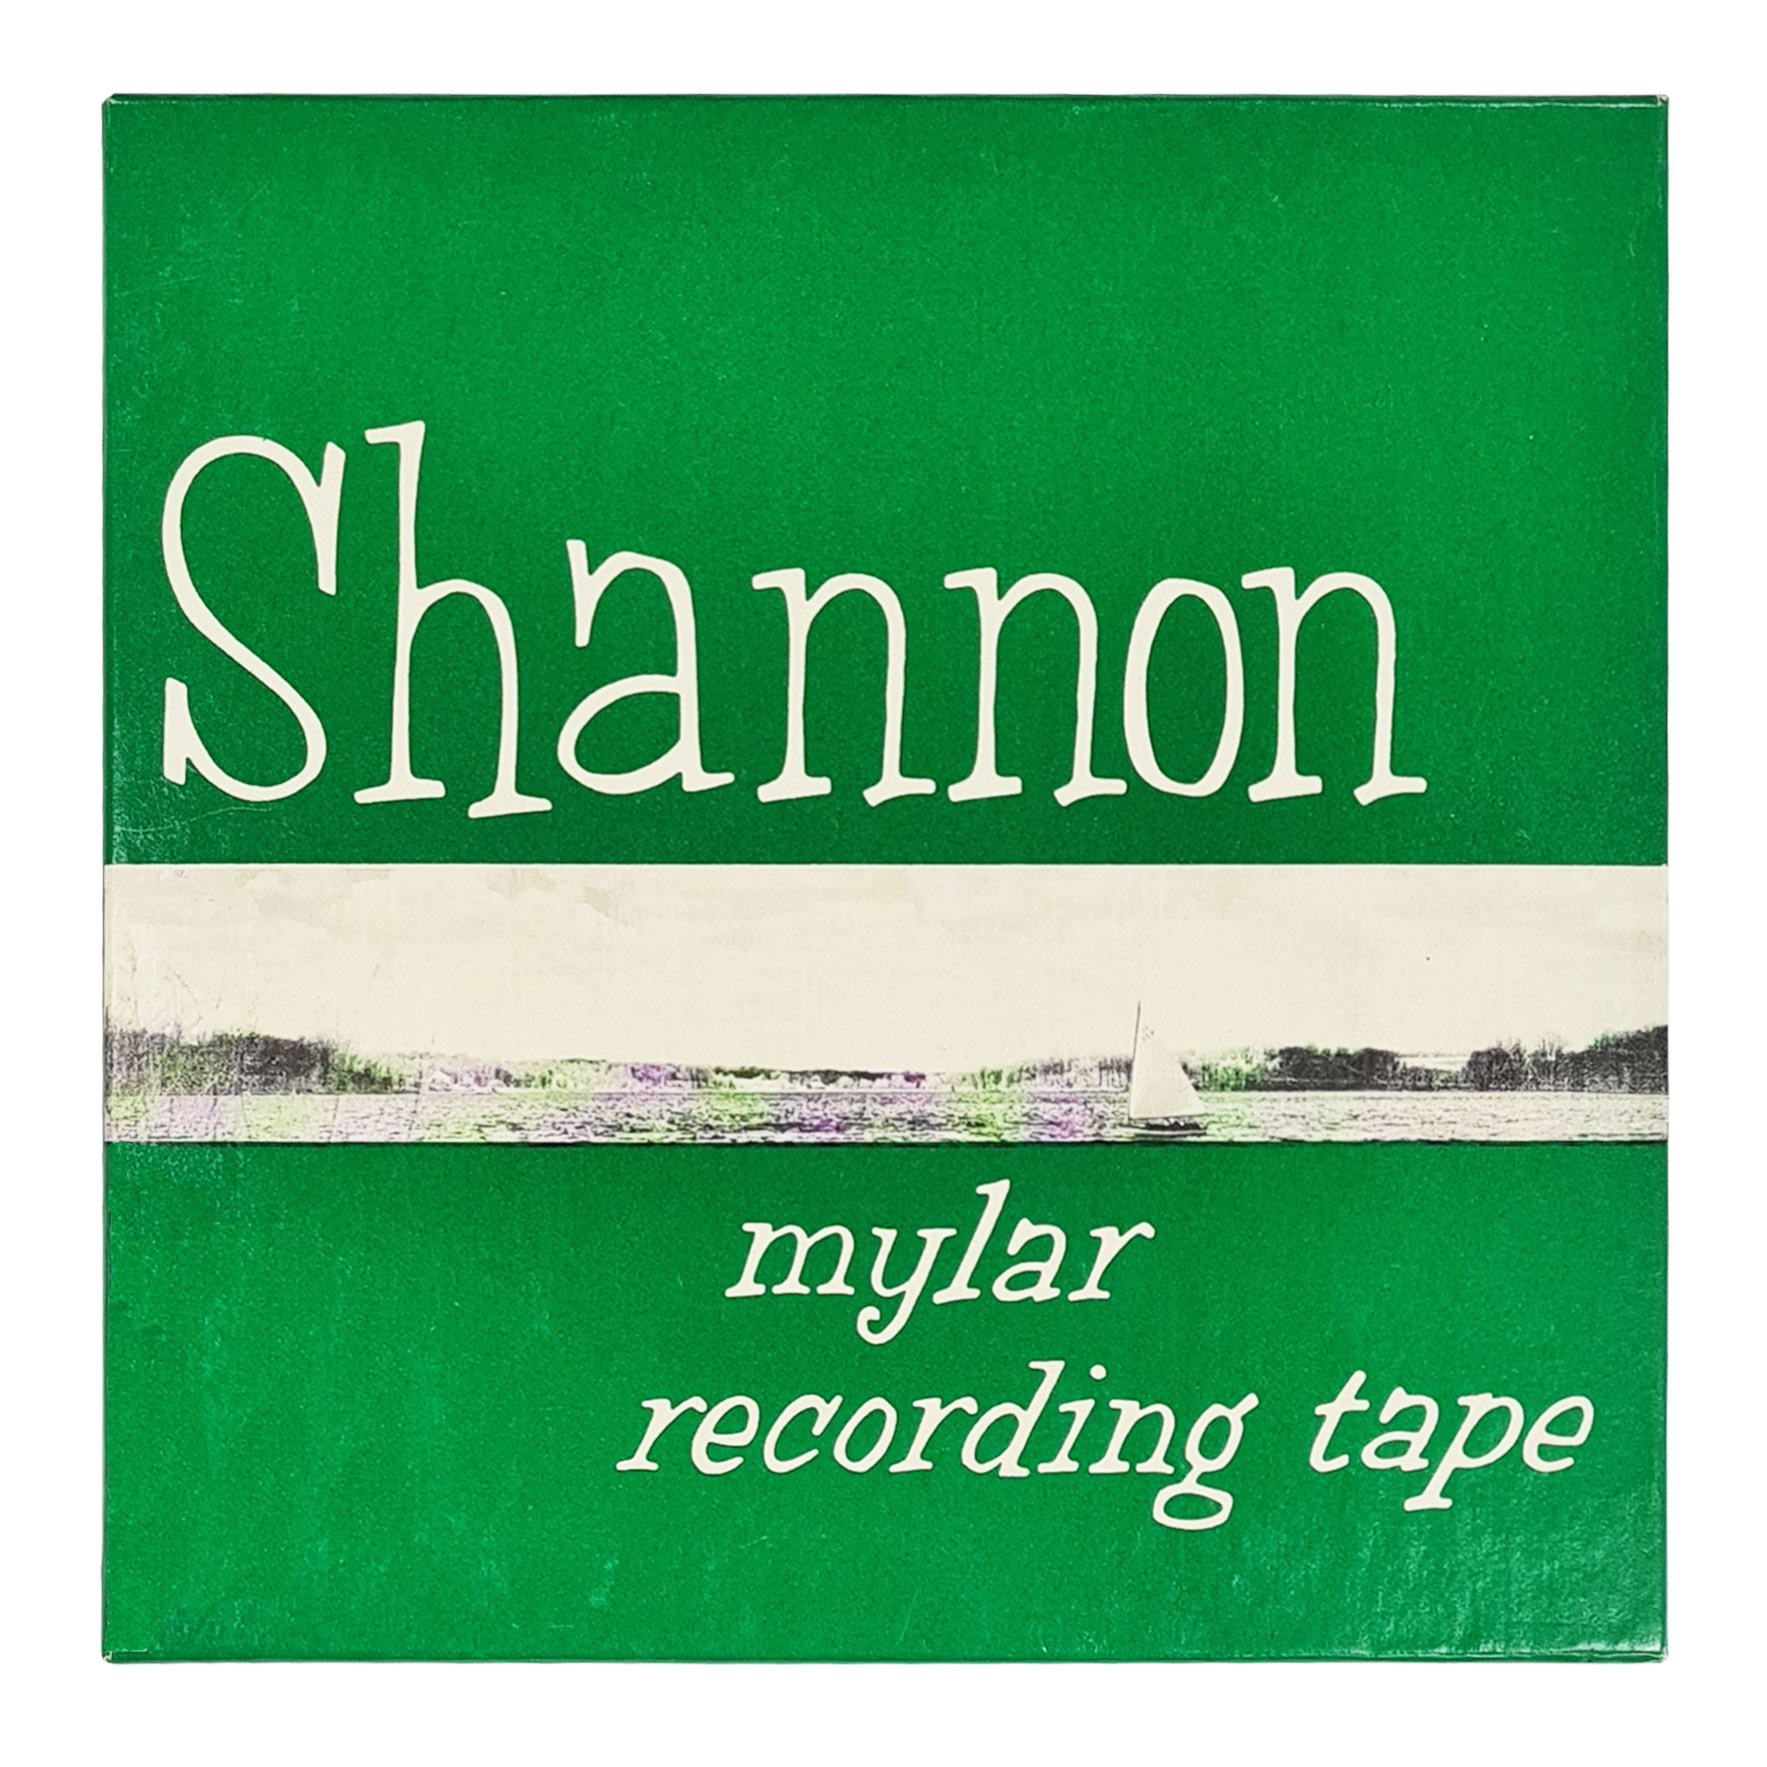 Shannon Mylar 7 inch spool reel to reel 1/4 audio tape 740m / 2400ft -  Retro Style Media